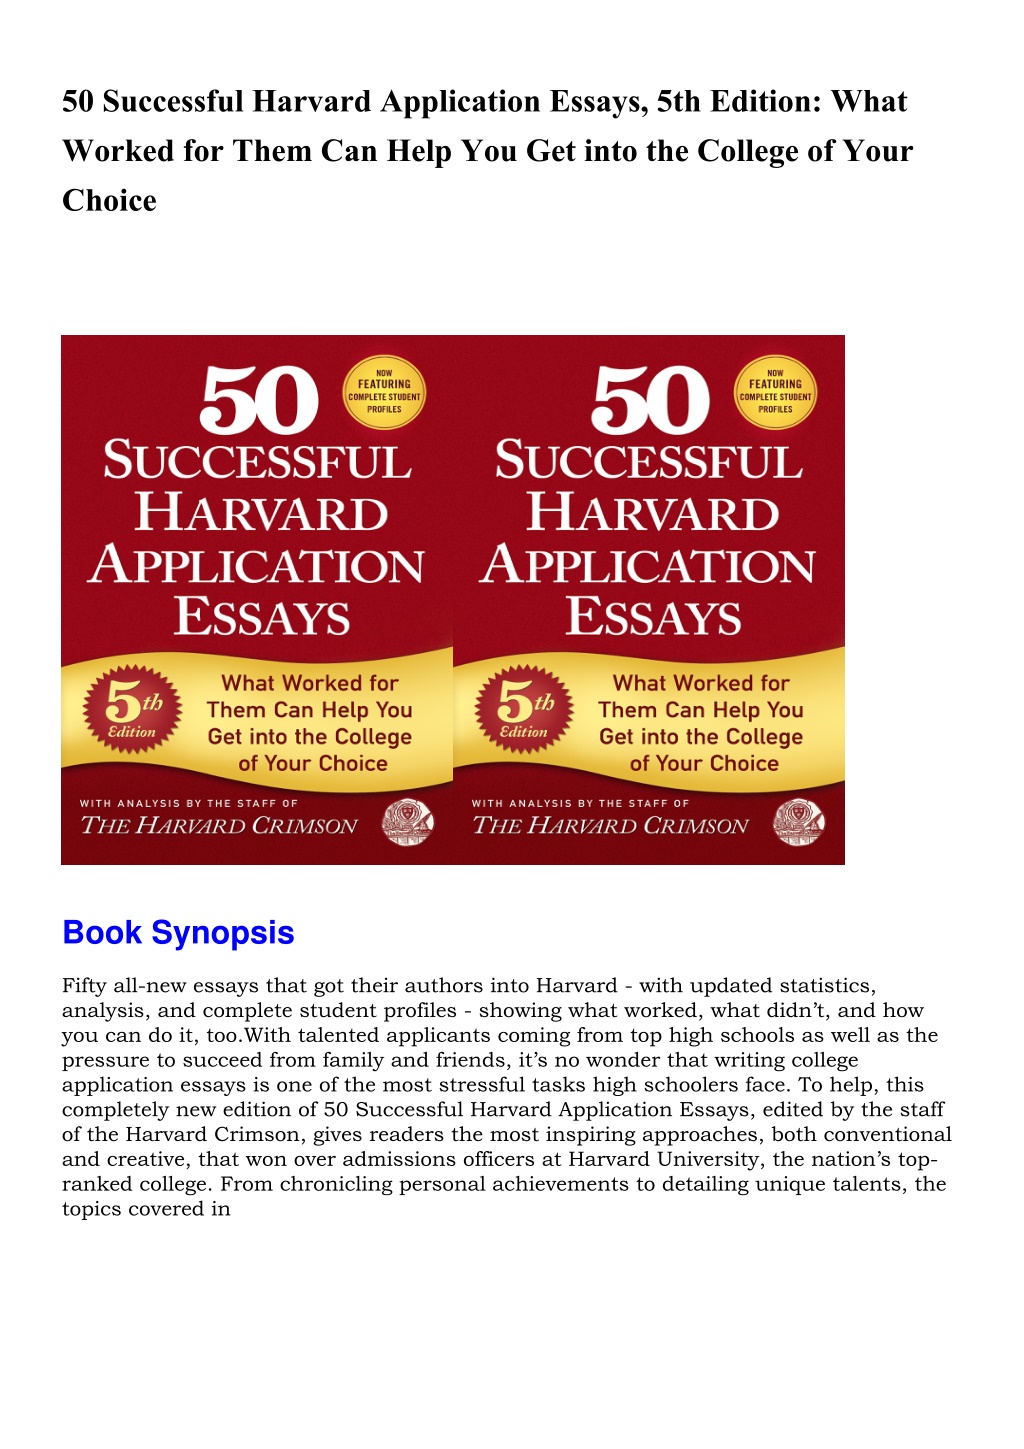 50 successful essays pdf